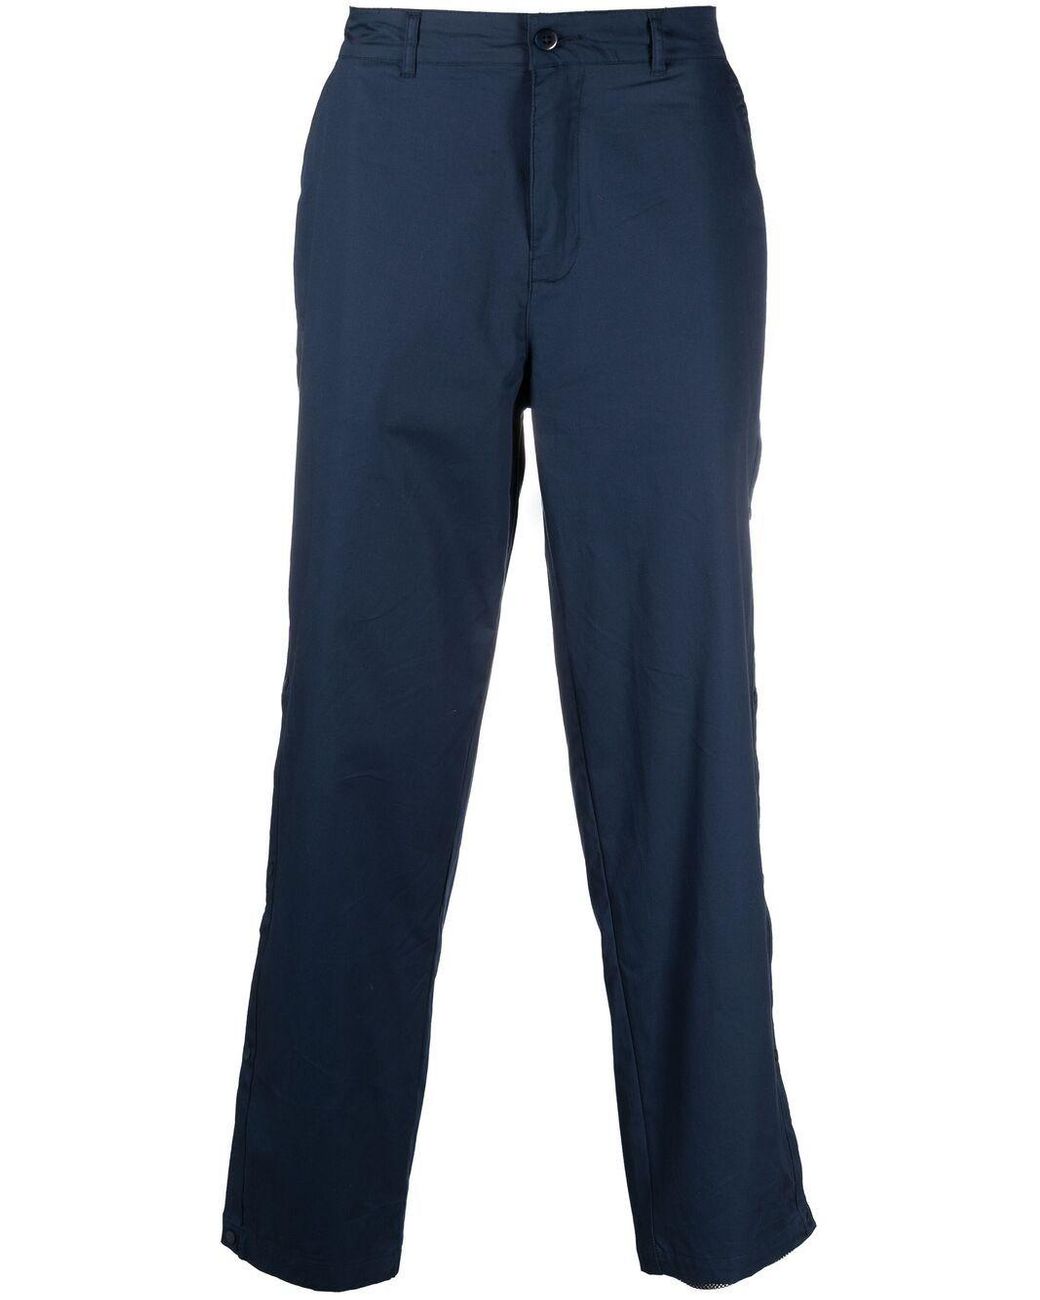 Converse Cotton X Kim Jones Cargo Trousers in Blue for Men - Lyst